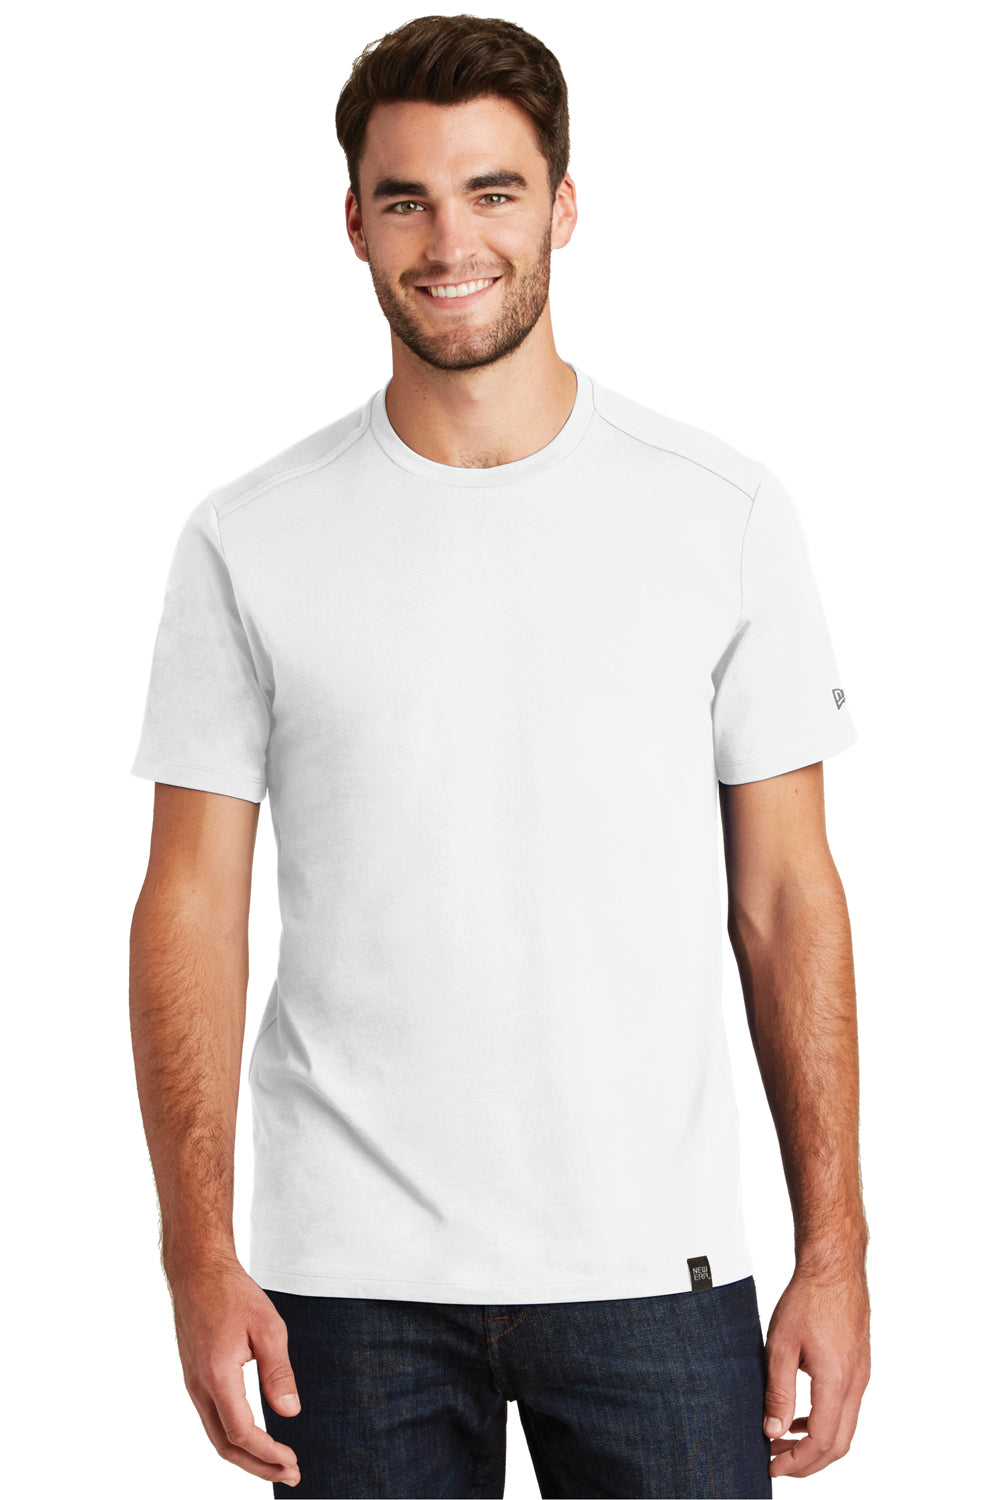 New Era NEA100 Mens Heritage Short Sleeve Crewneck T-Shirt White Front